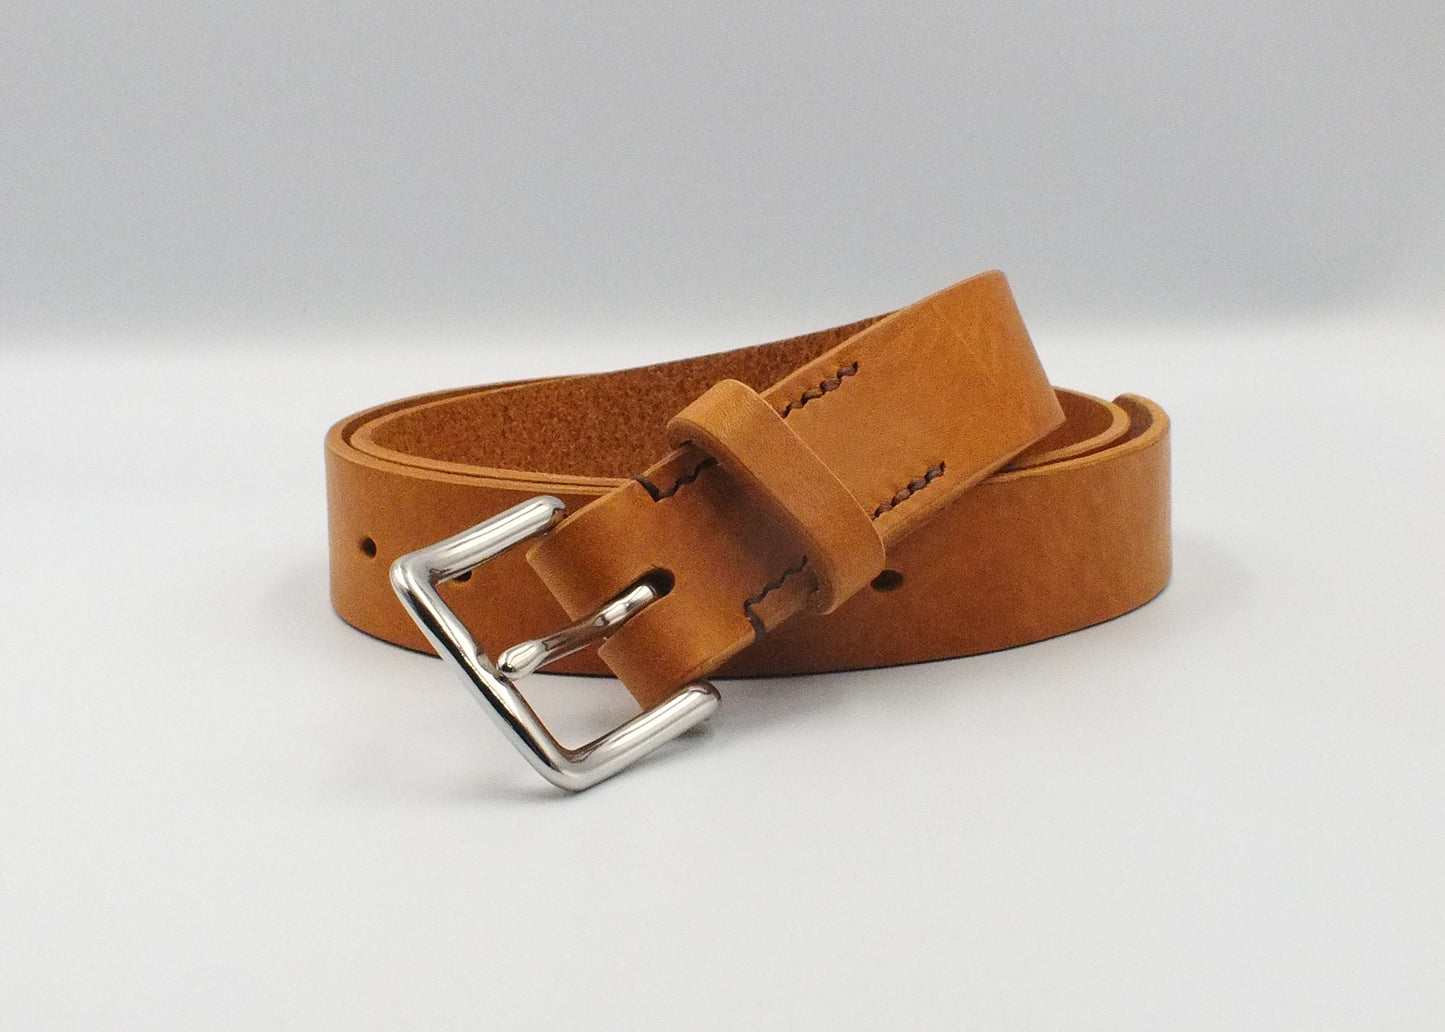 SALE - Tan Leather Belt - 1.25" (32mm wide) - 32" to 36" Waist